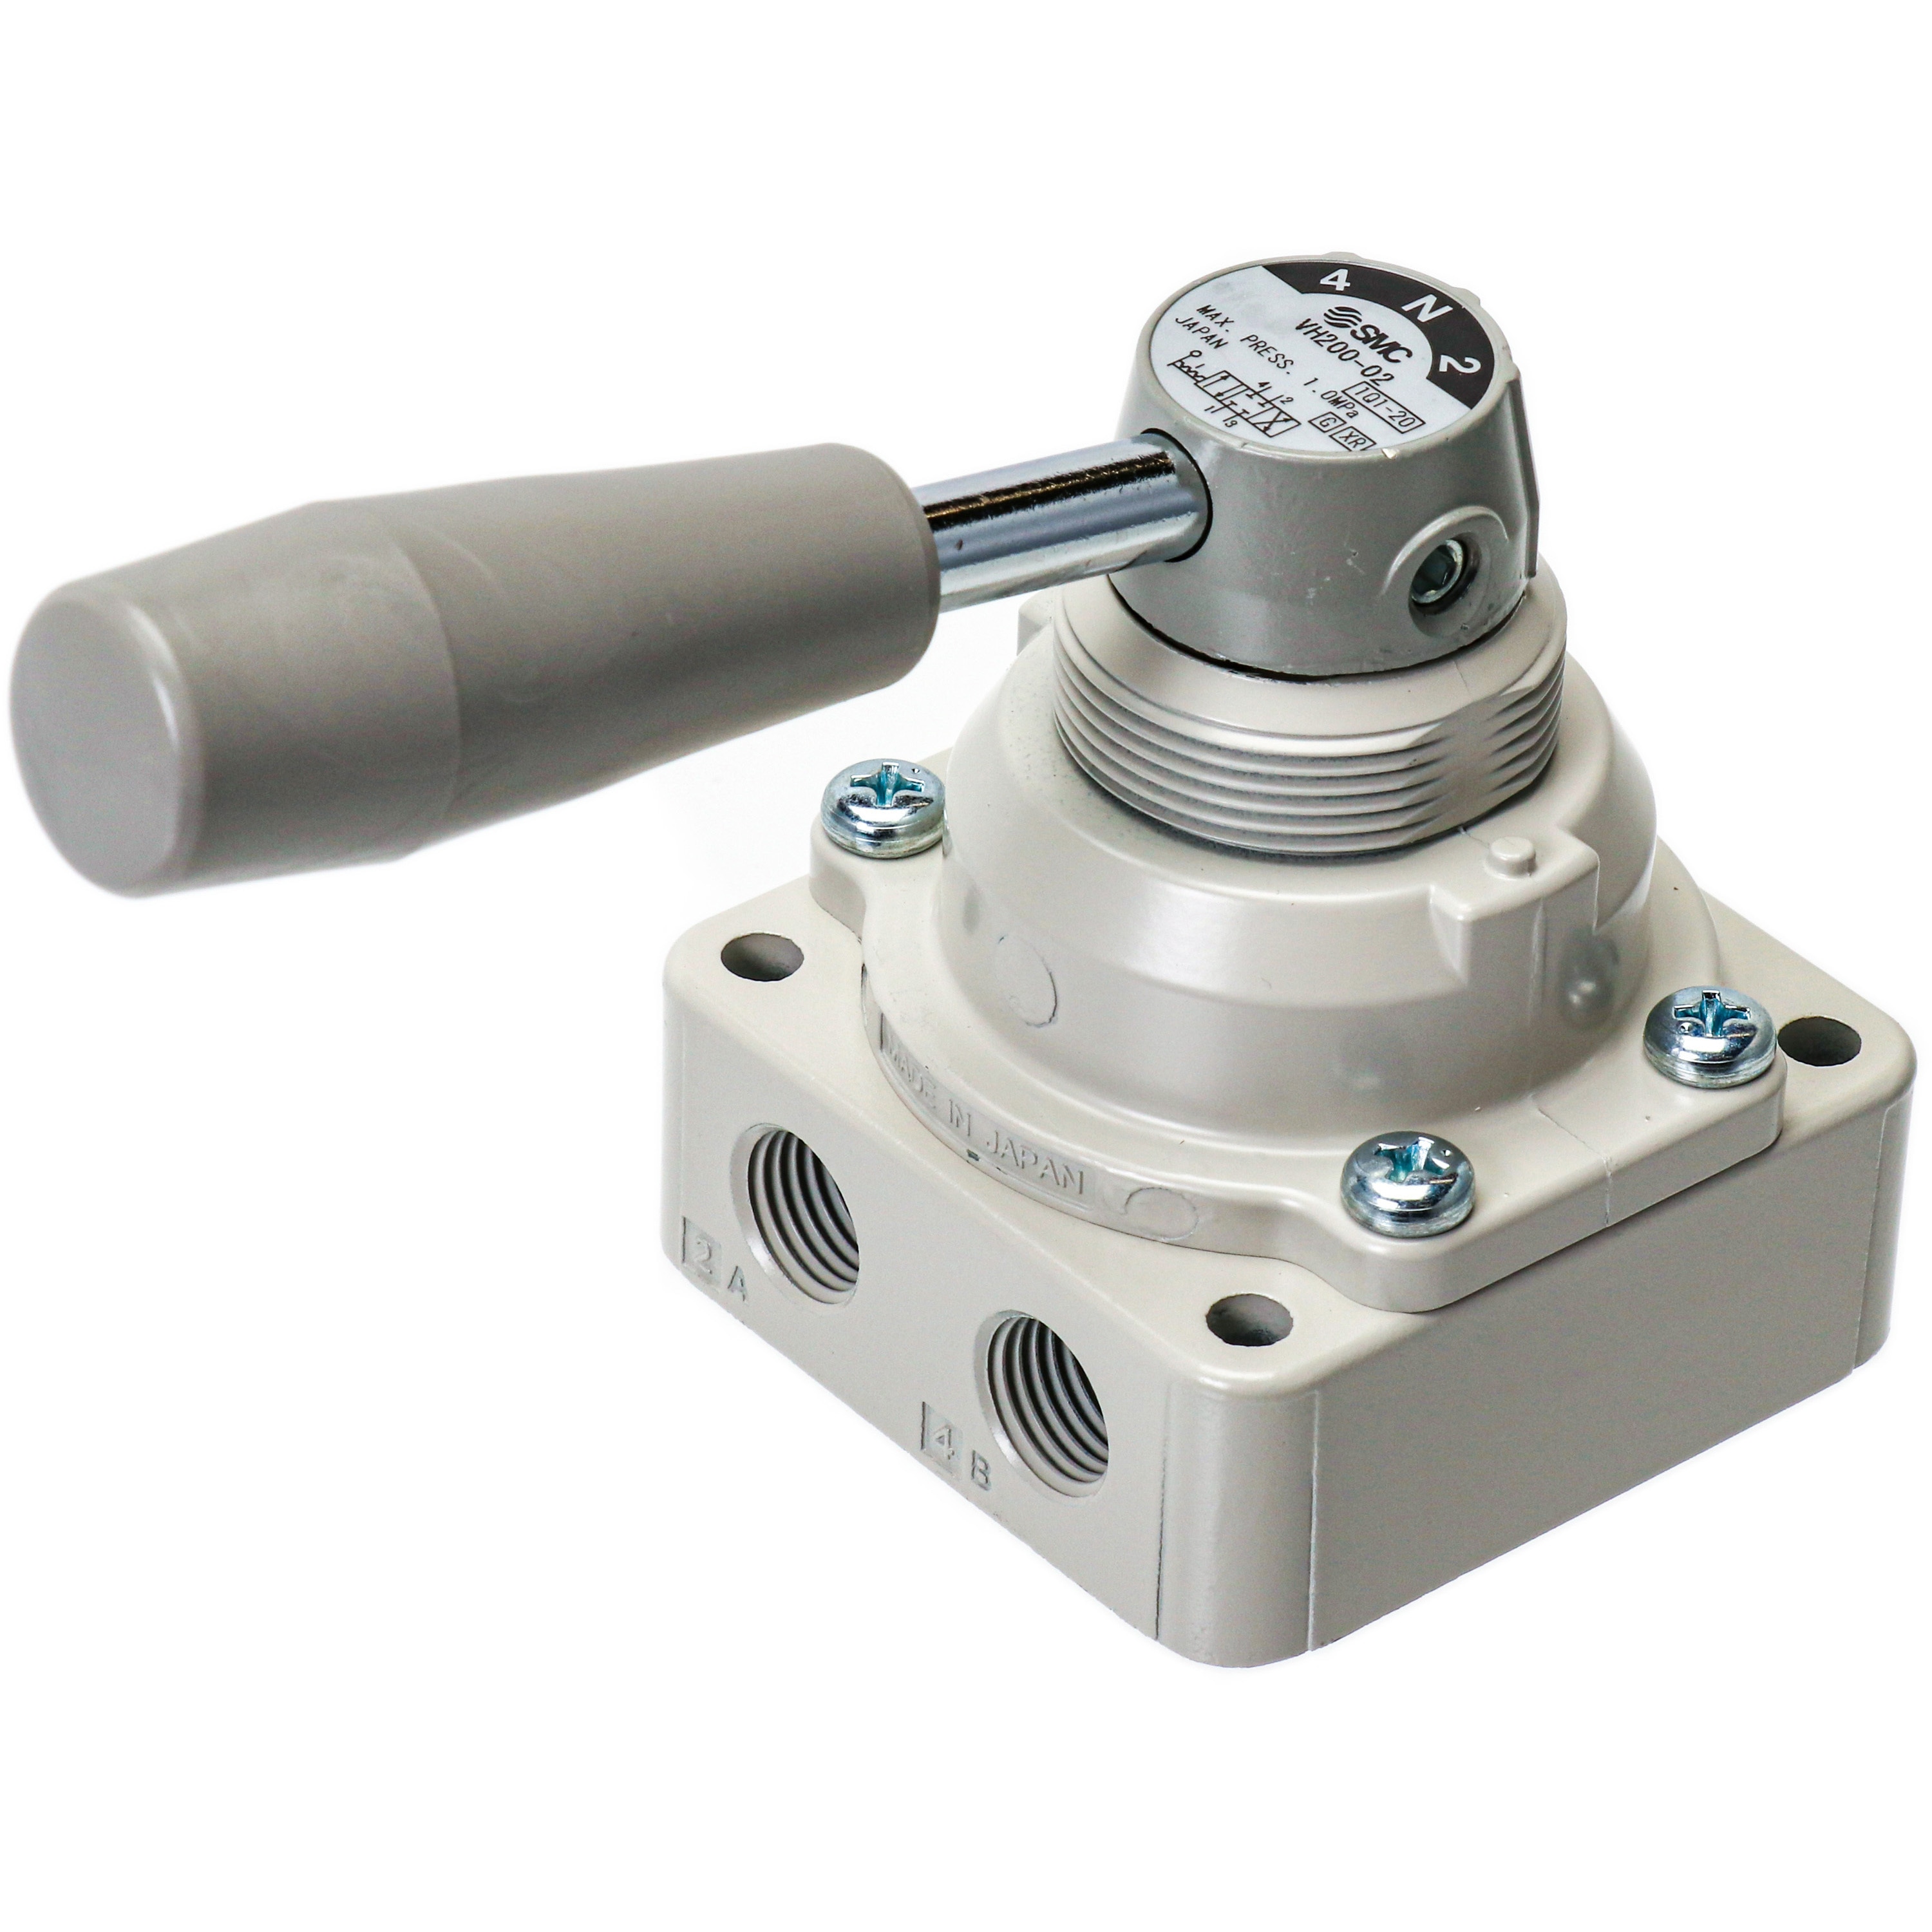 SMC VHS400-02 hand valve 1/4 pt 